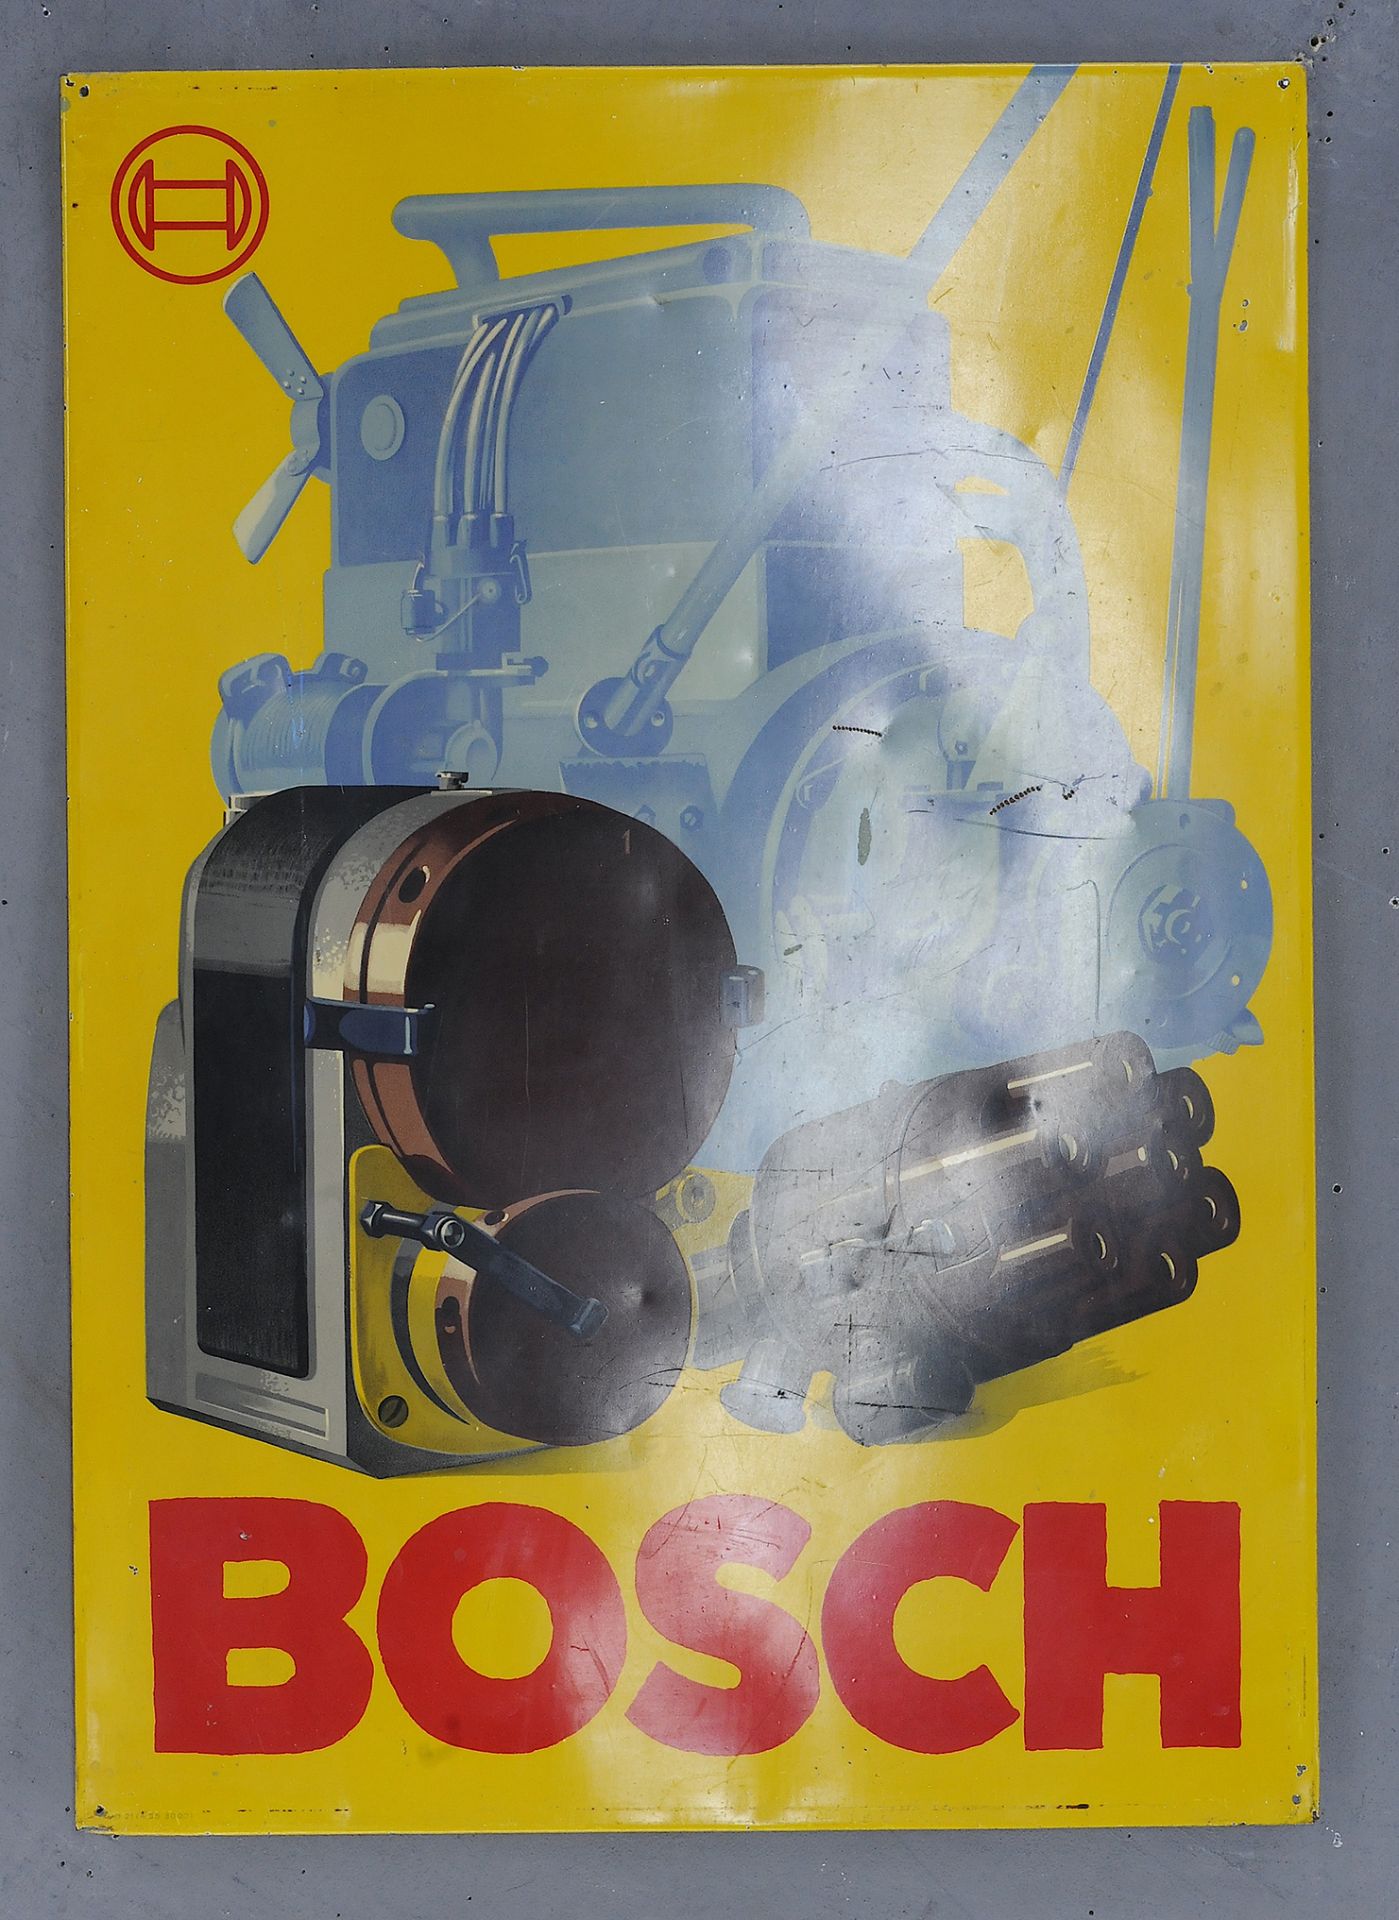 Bosch - Image 3 of 3